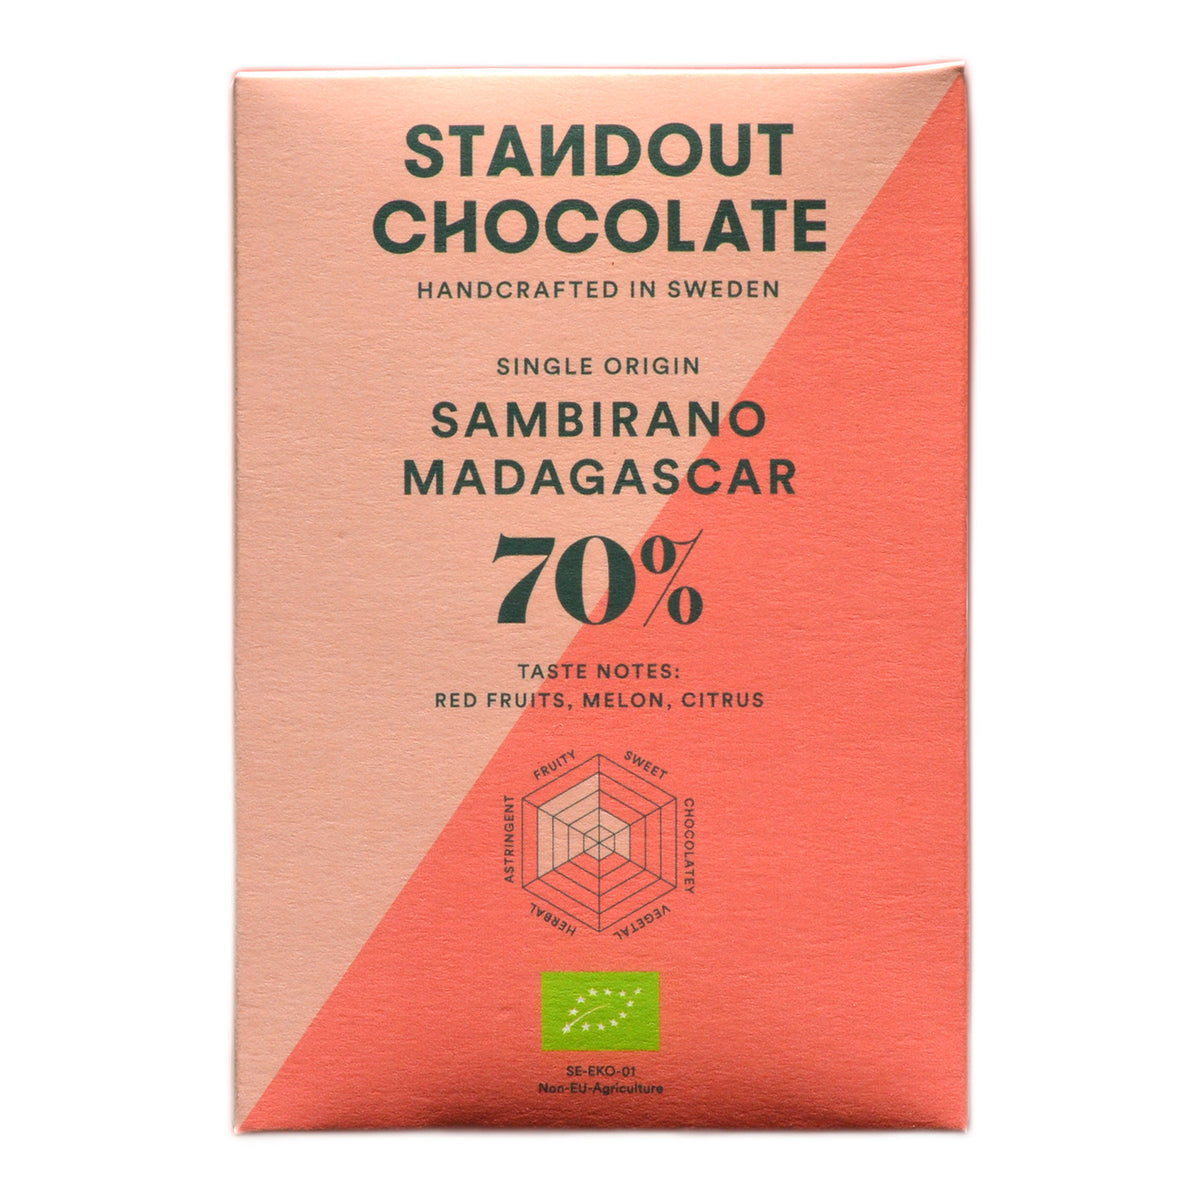 Standout Chocolate Sambirano Madagascar 70%